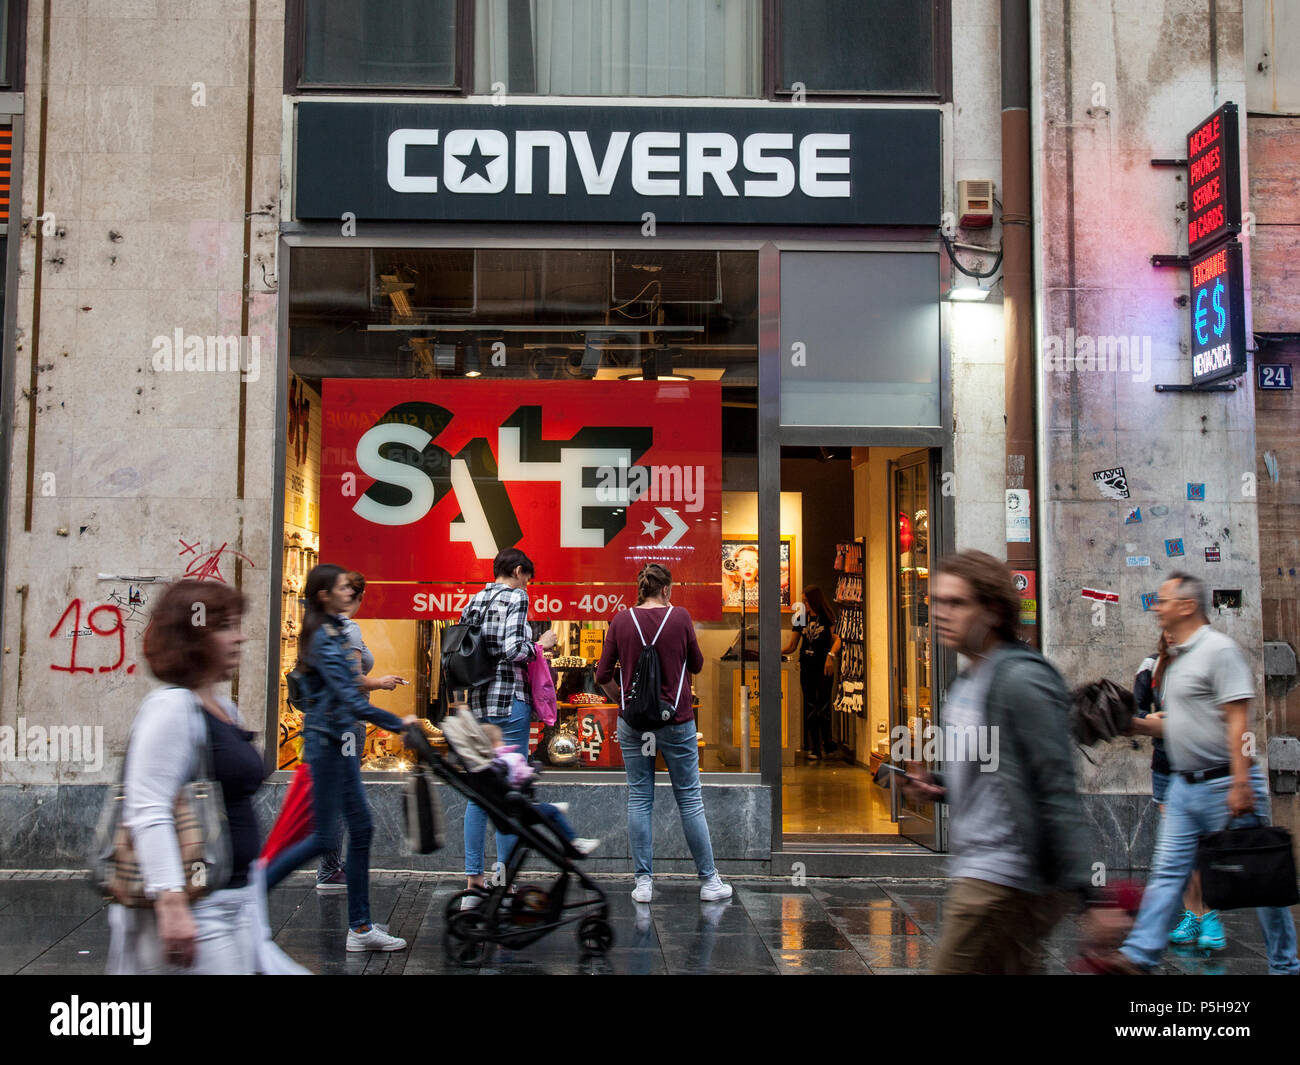 converse shop in london